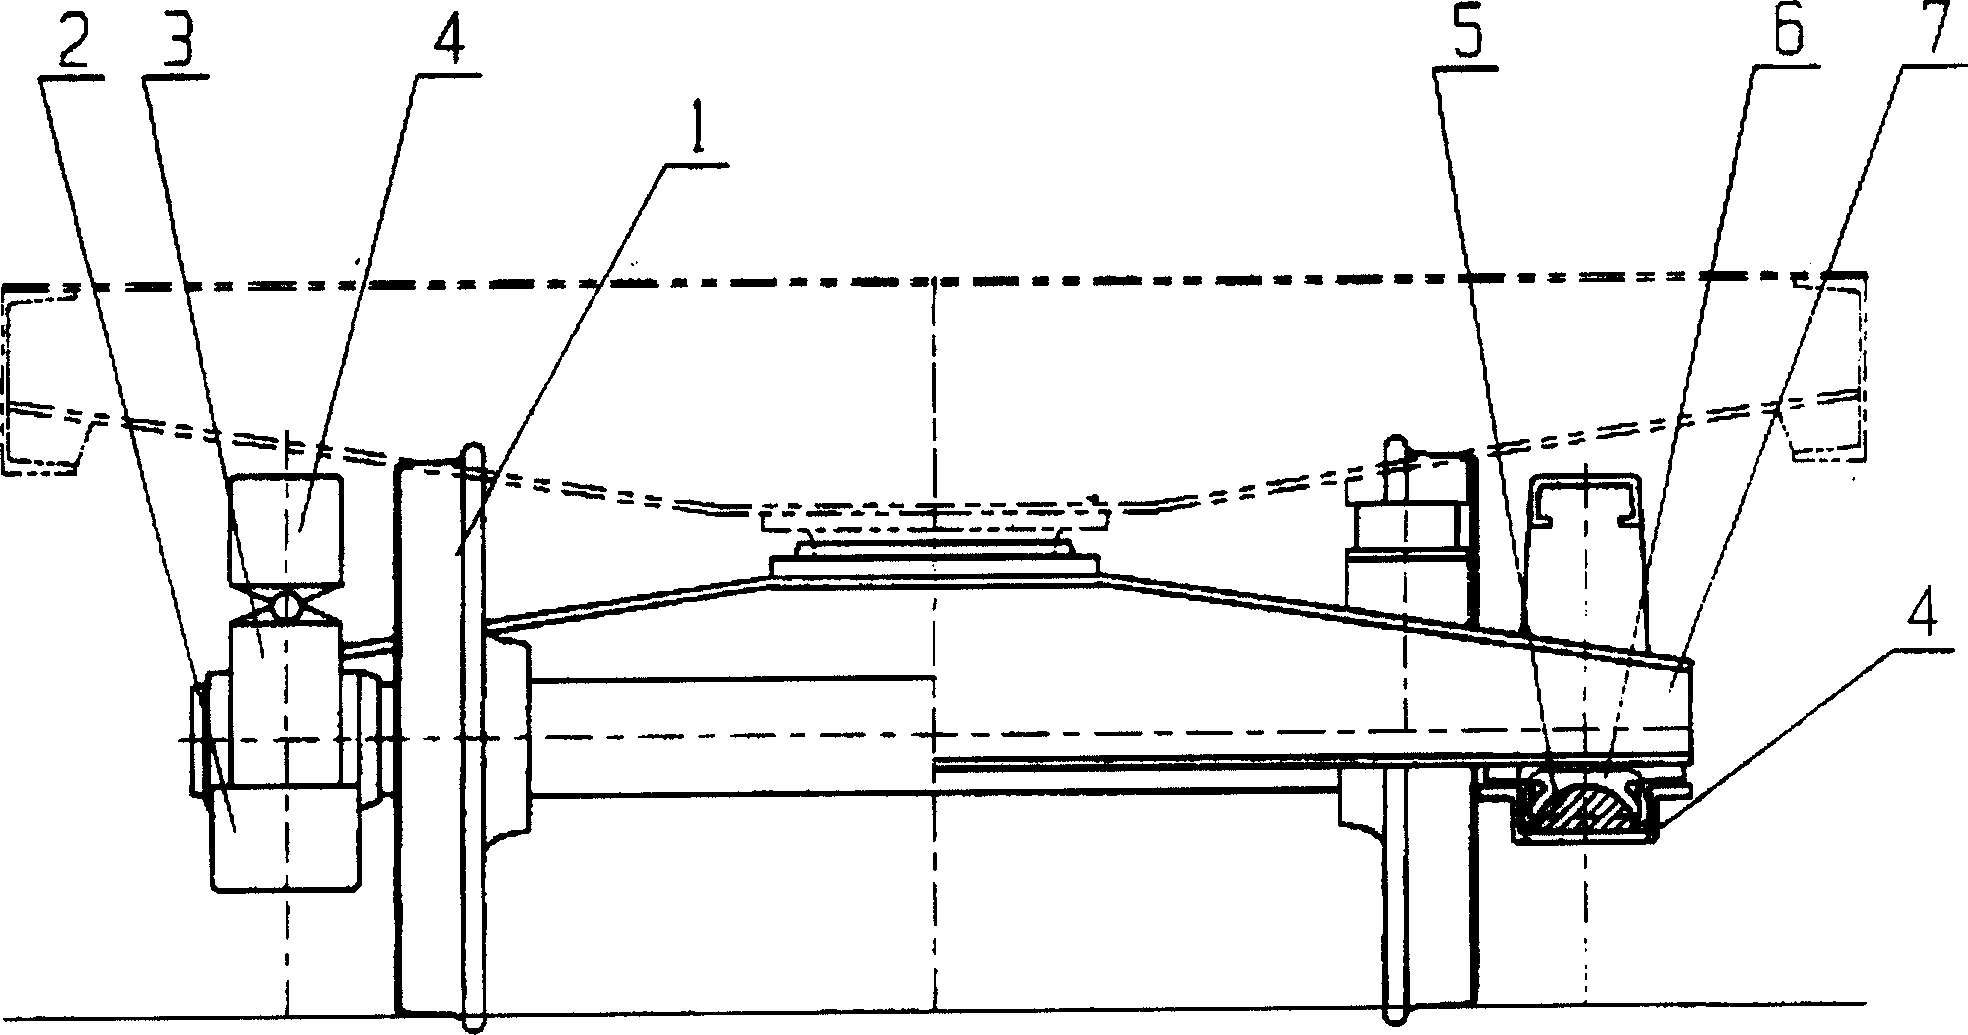 Suspension swing type bogie of axle box for railway vehicle